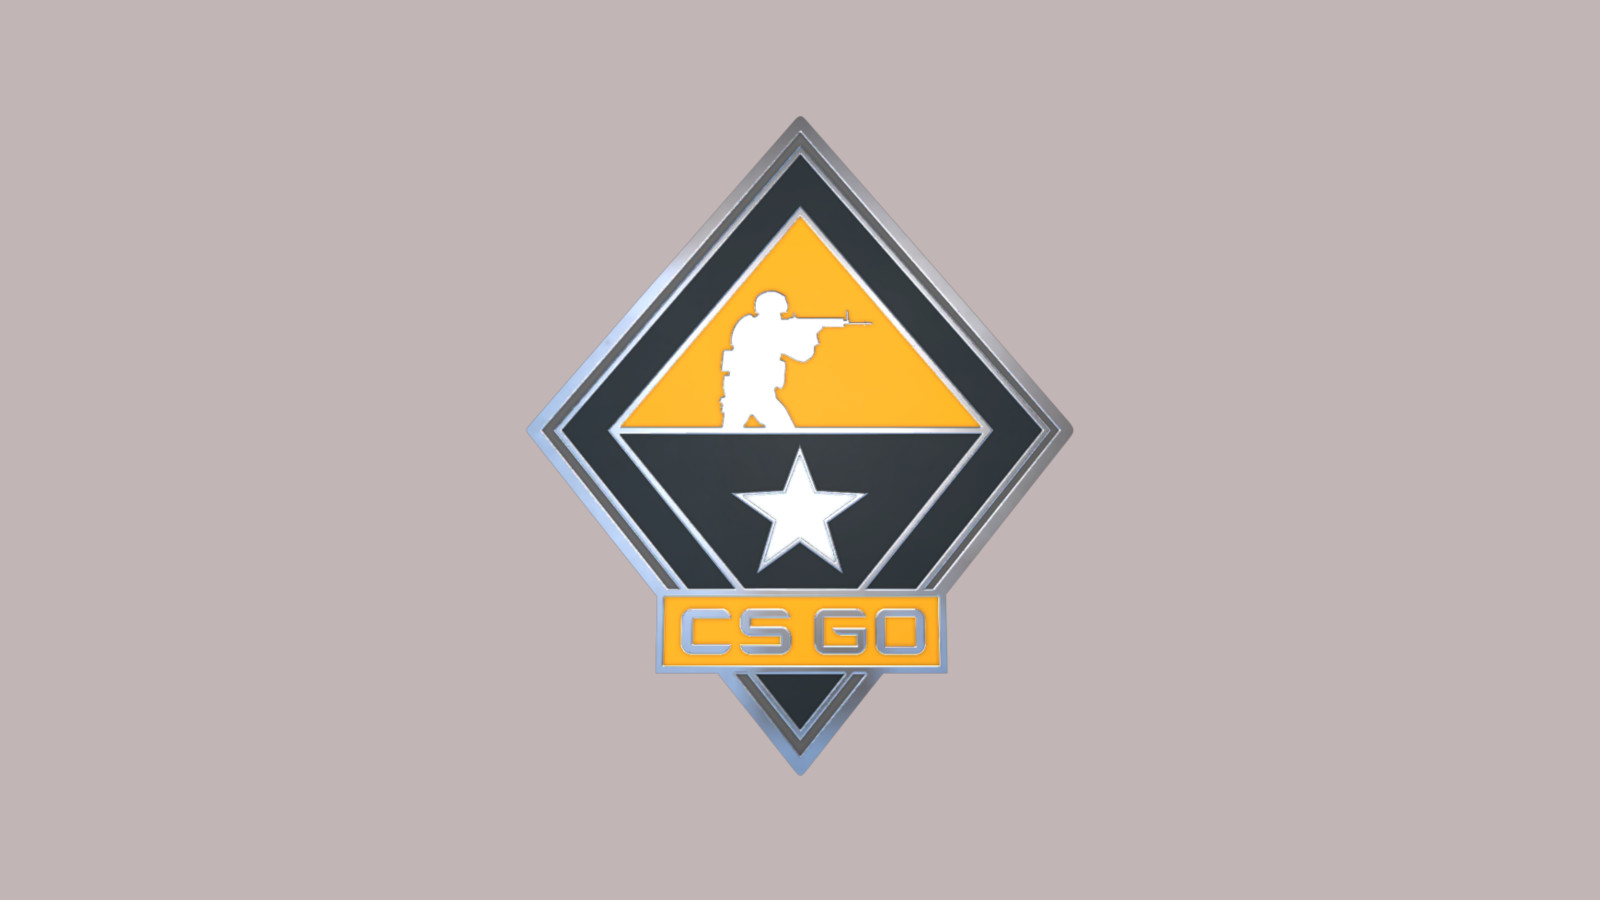 CS:GO - Series 1 - Tactics Collectible Pin